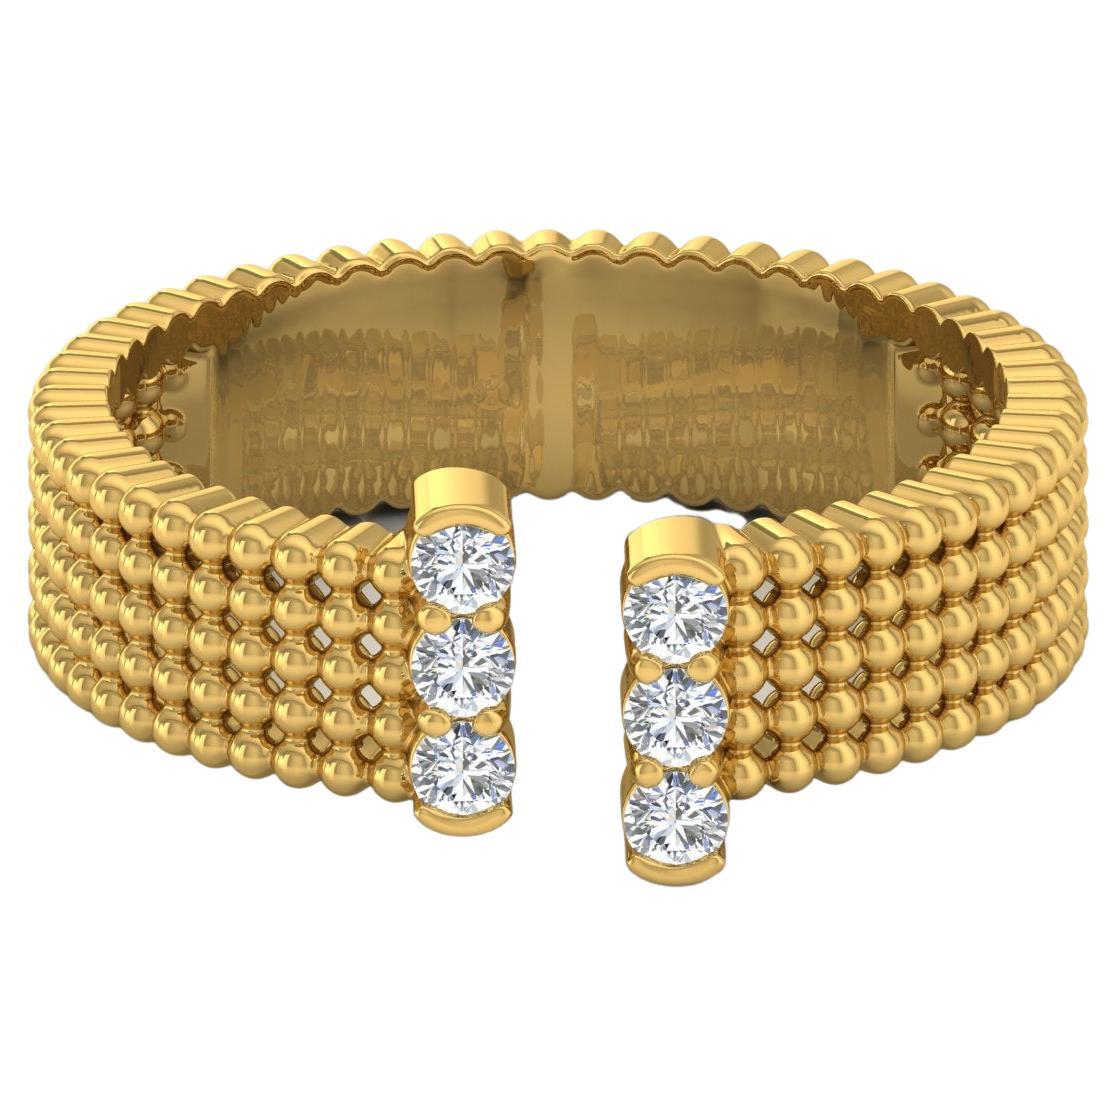 0.17 Carat Diamond Cuff Beaded Band Ring 18 Karat Yellow Gold Handmade Jewelry